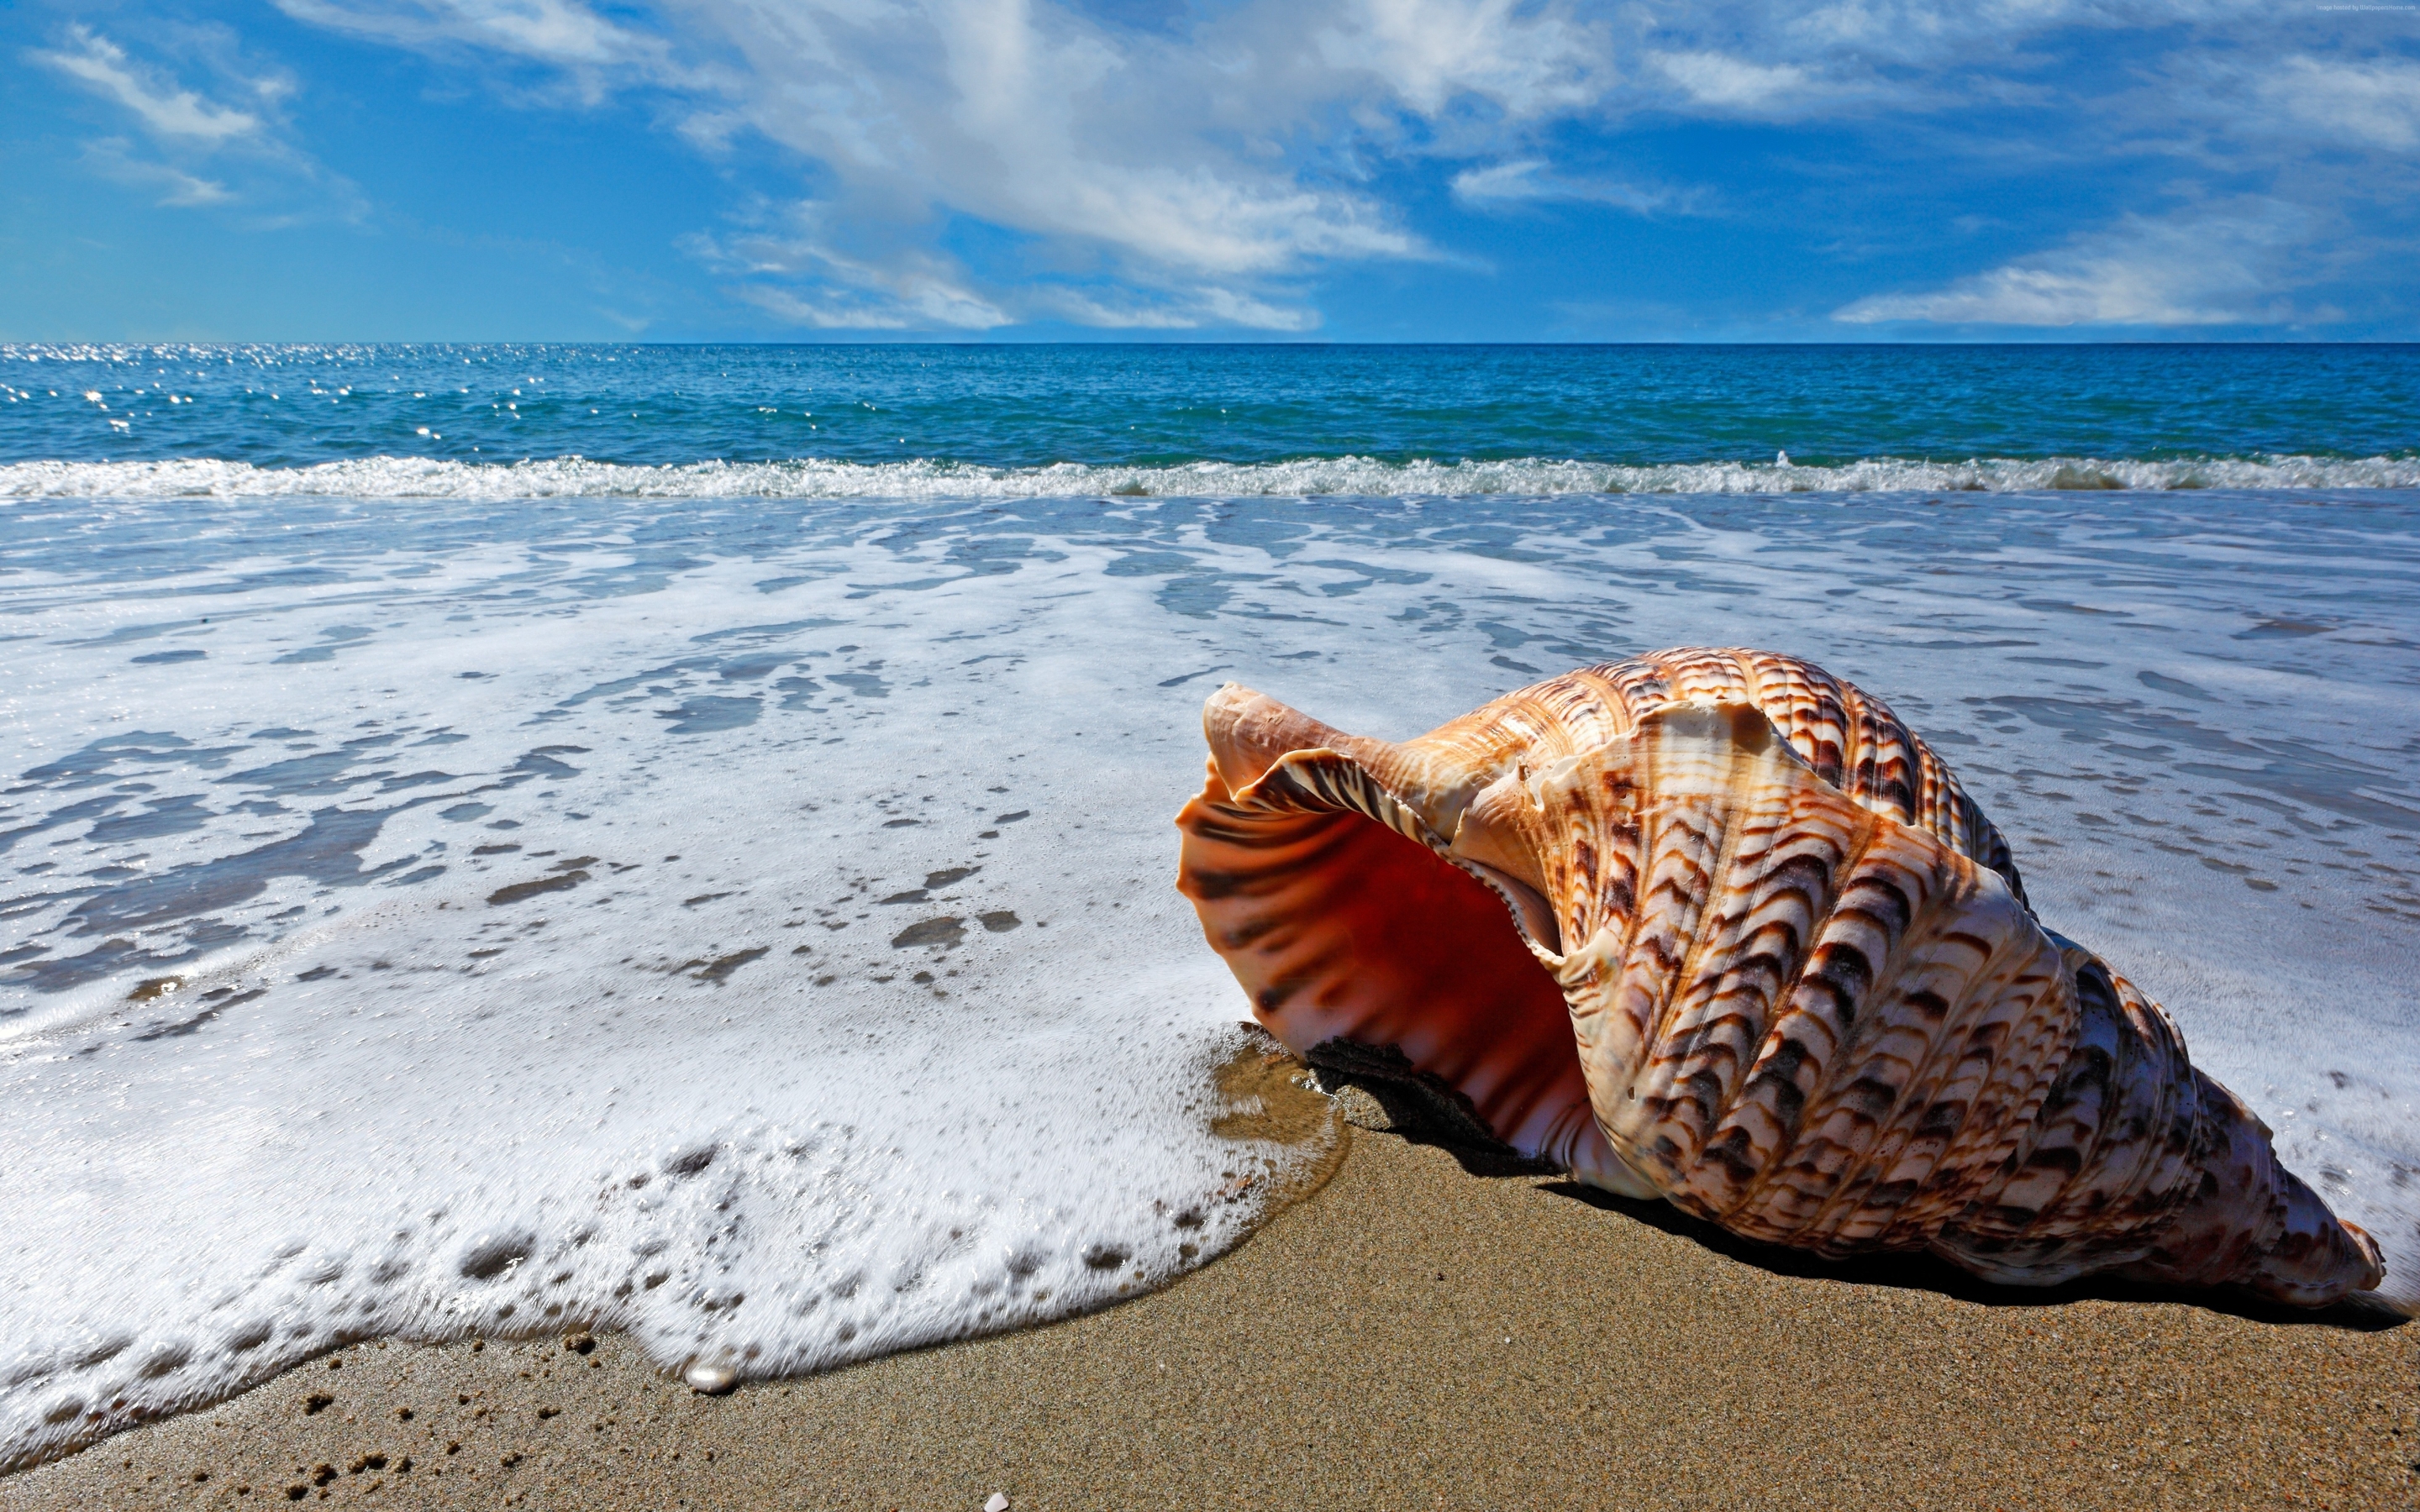 Sea Shell on Sea Shore for 2880 x 1800 Retina Display resolution